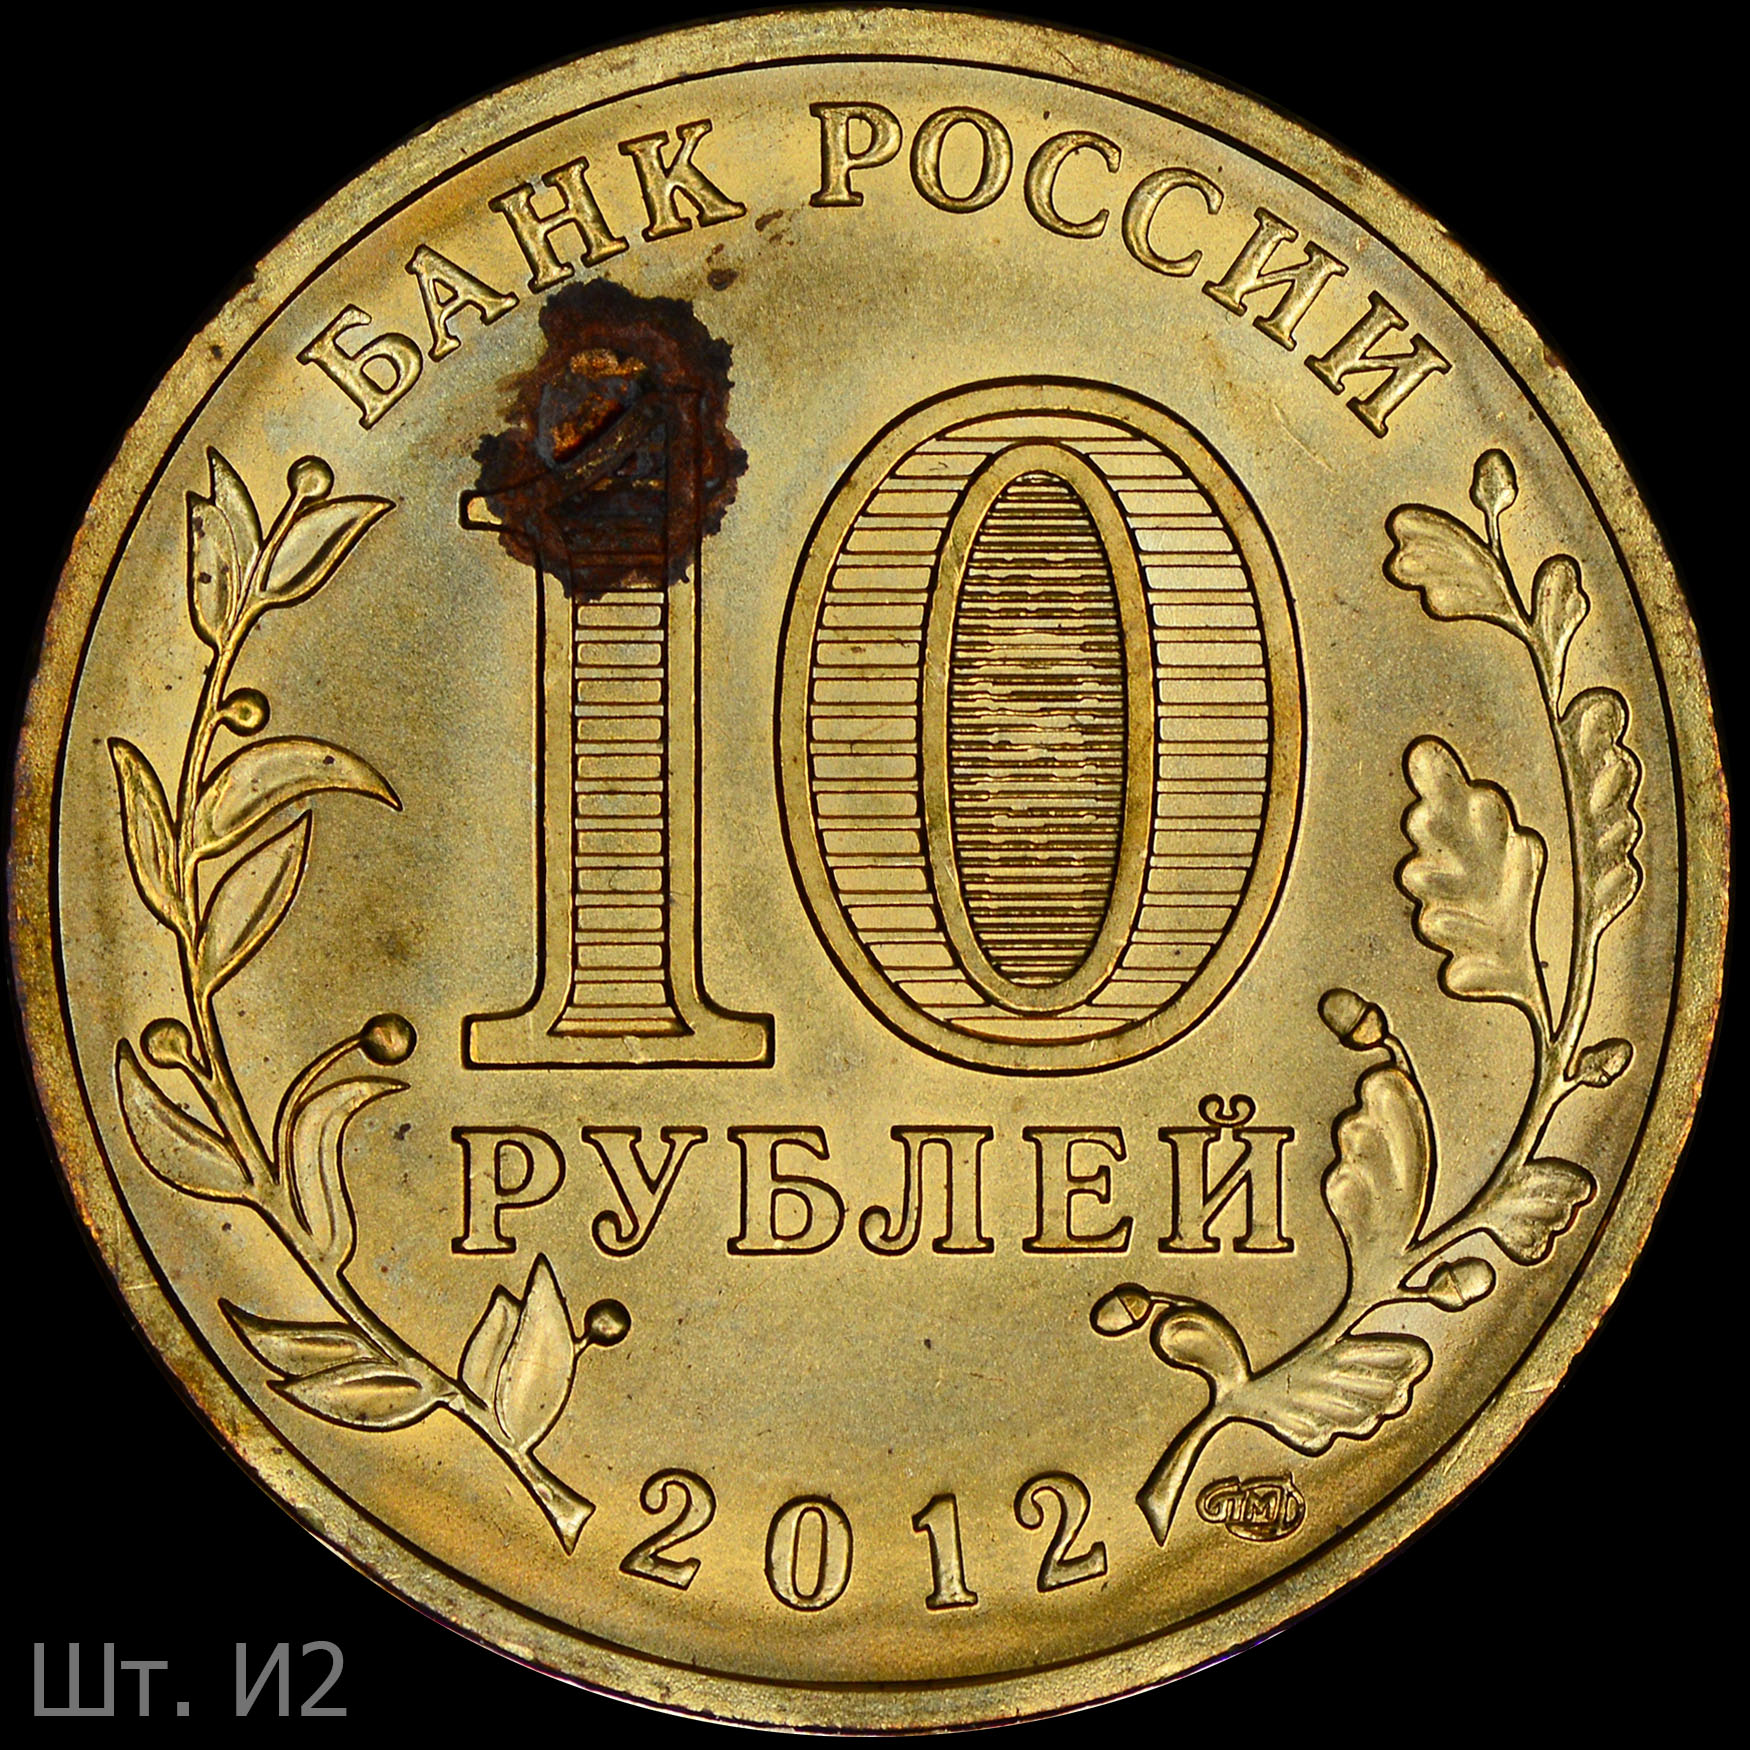 Steam рубли по 10 рублей фото 62